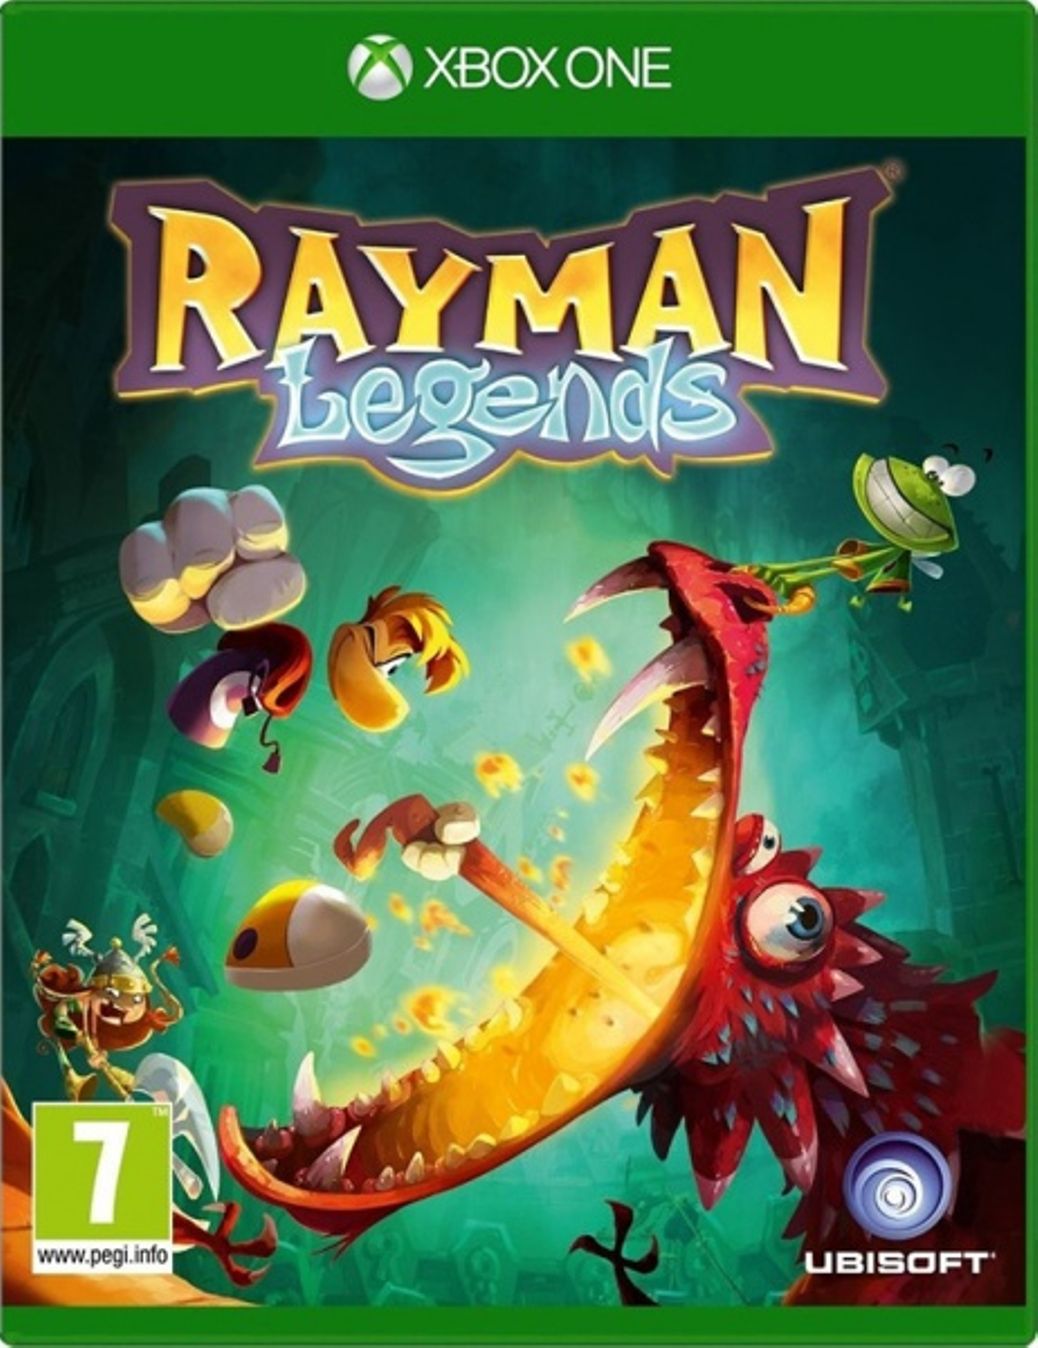 Rayman Legends XBOX ONE digital game code / key